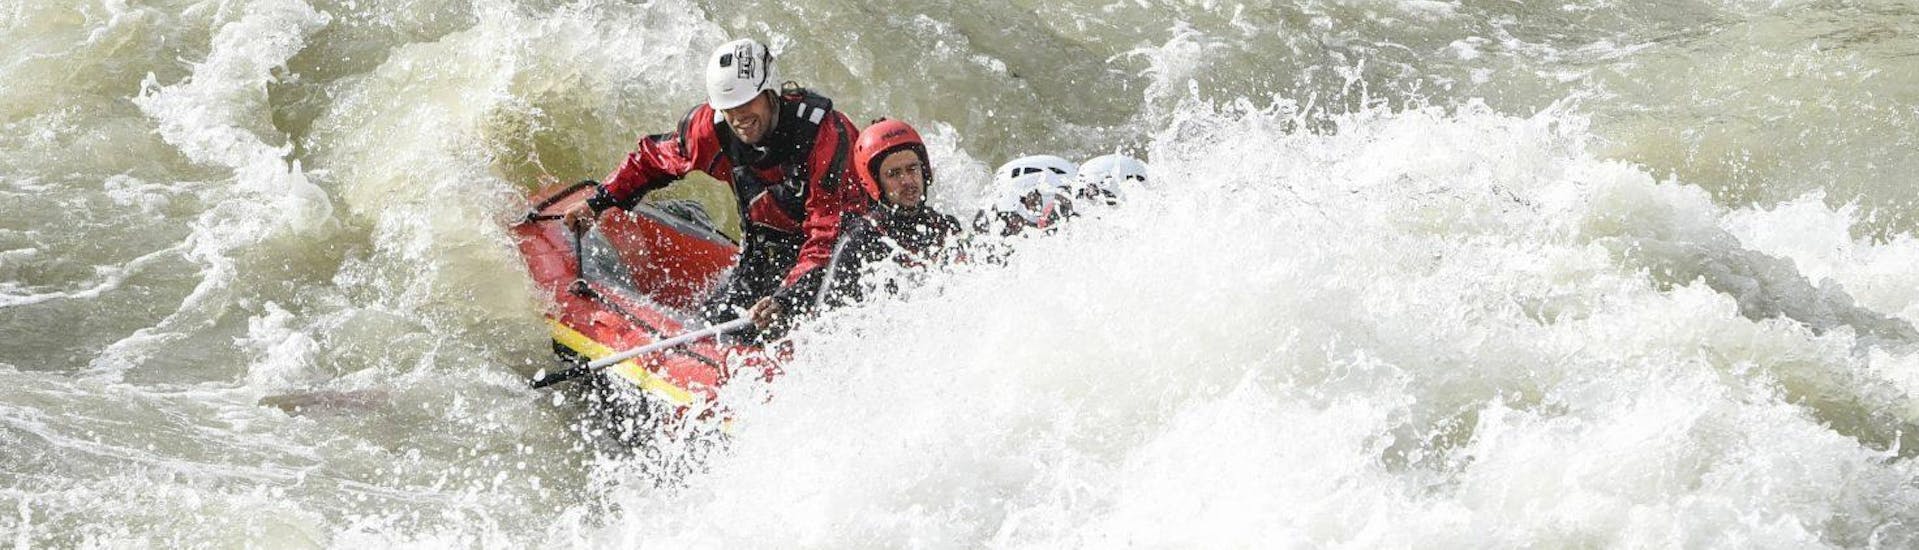 Classic Rafting on the Río Gállego with River Guru Murillo de Gallego - Hero image